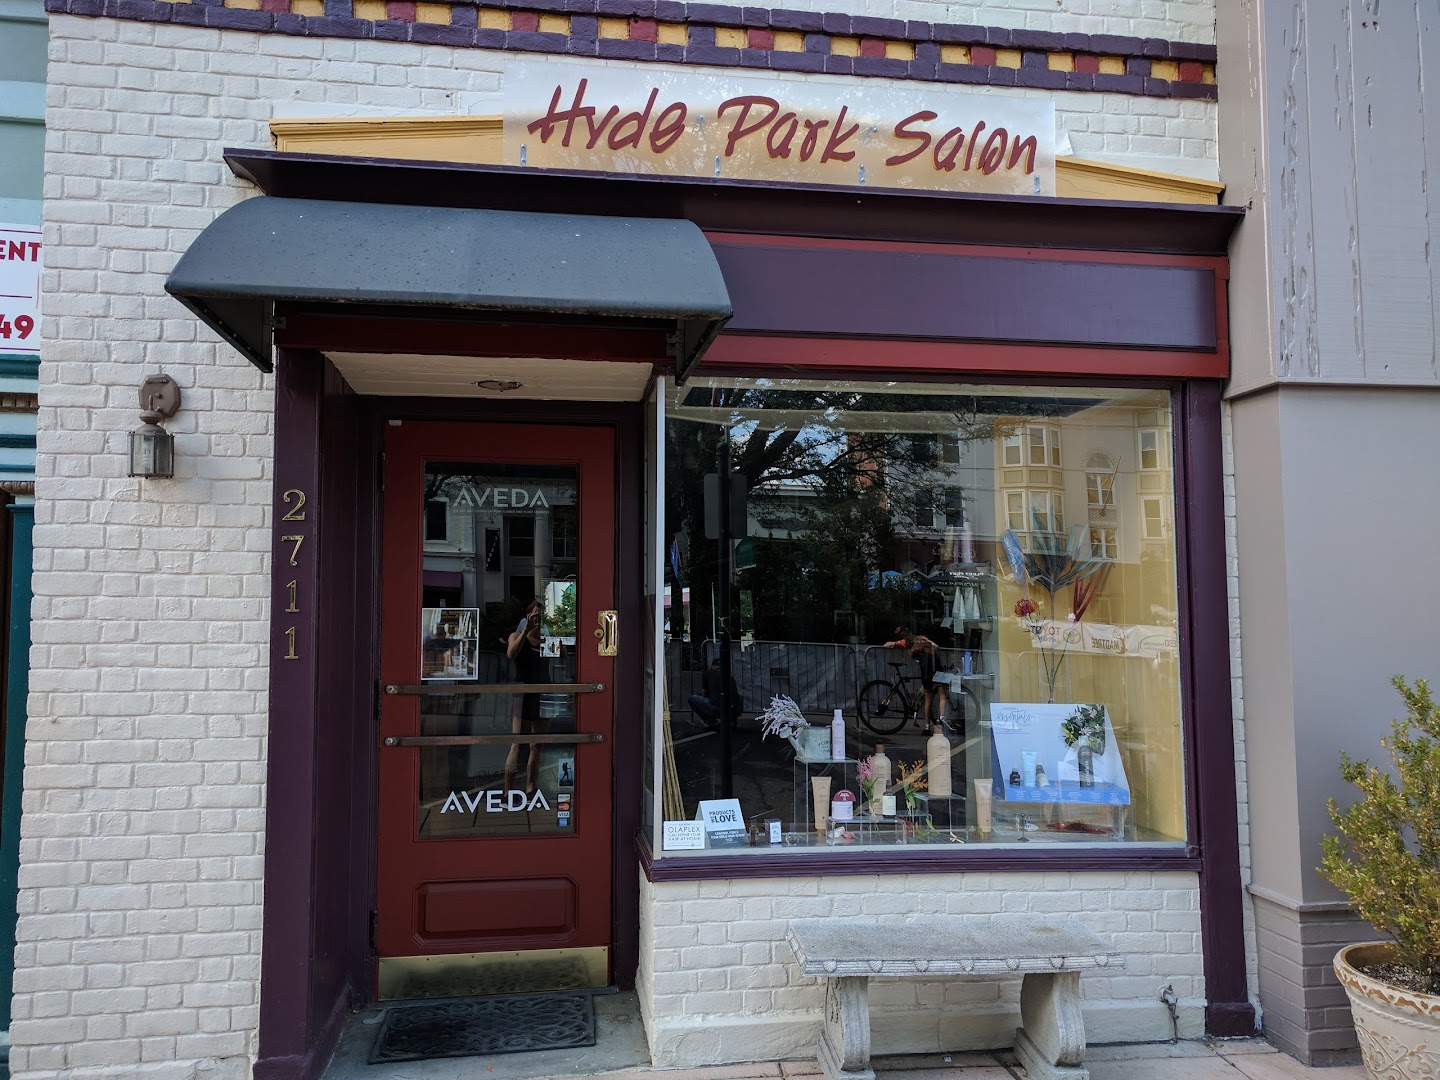 Hyde Park Salon